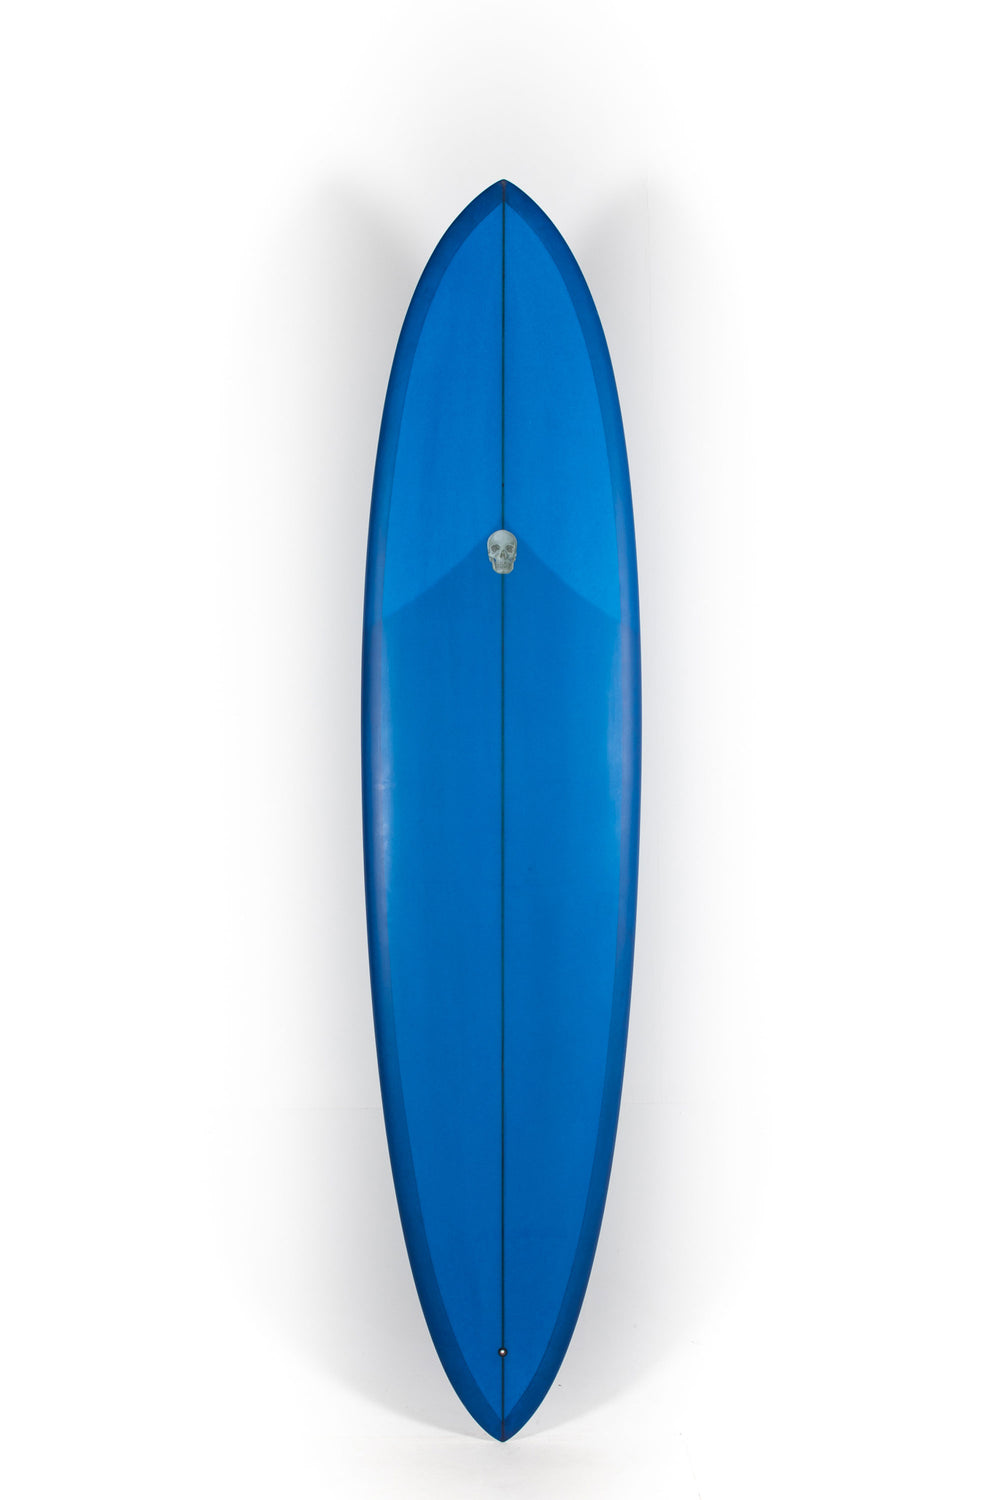 Pukas Surf Shop - Christenson Surfboards - C-BUCKET - 8'0